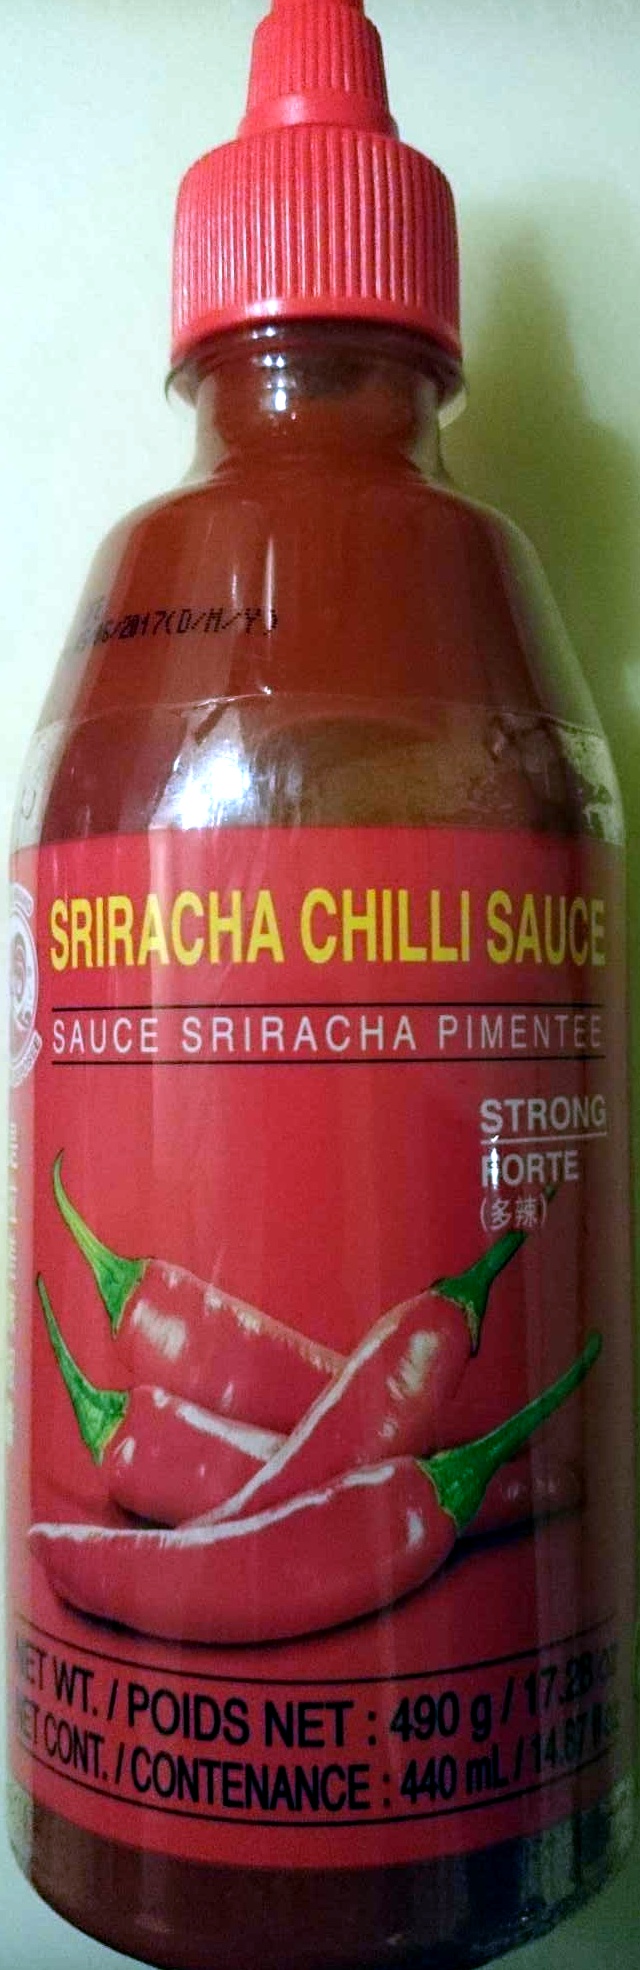 Sriracha chilli sauce - Product